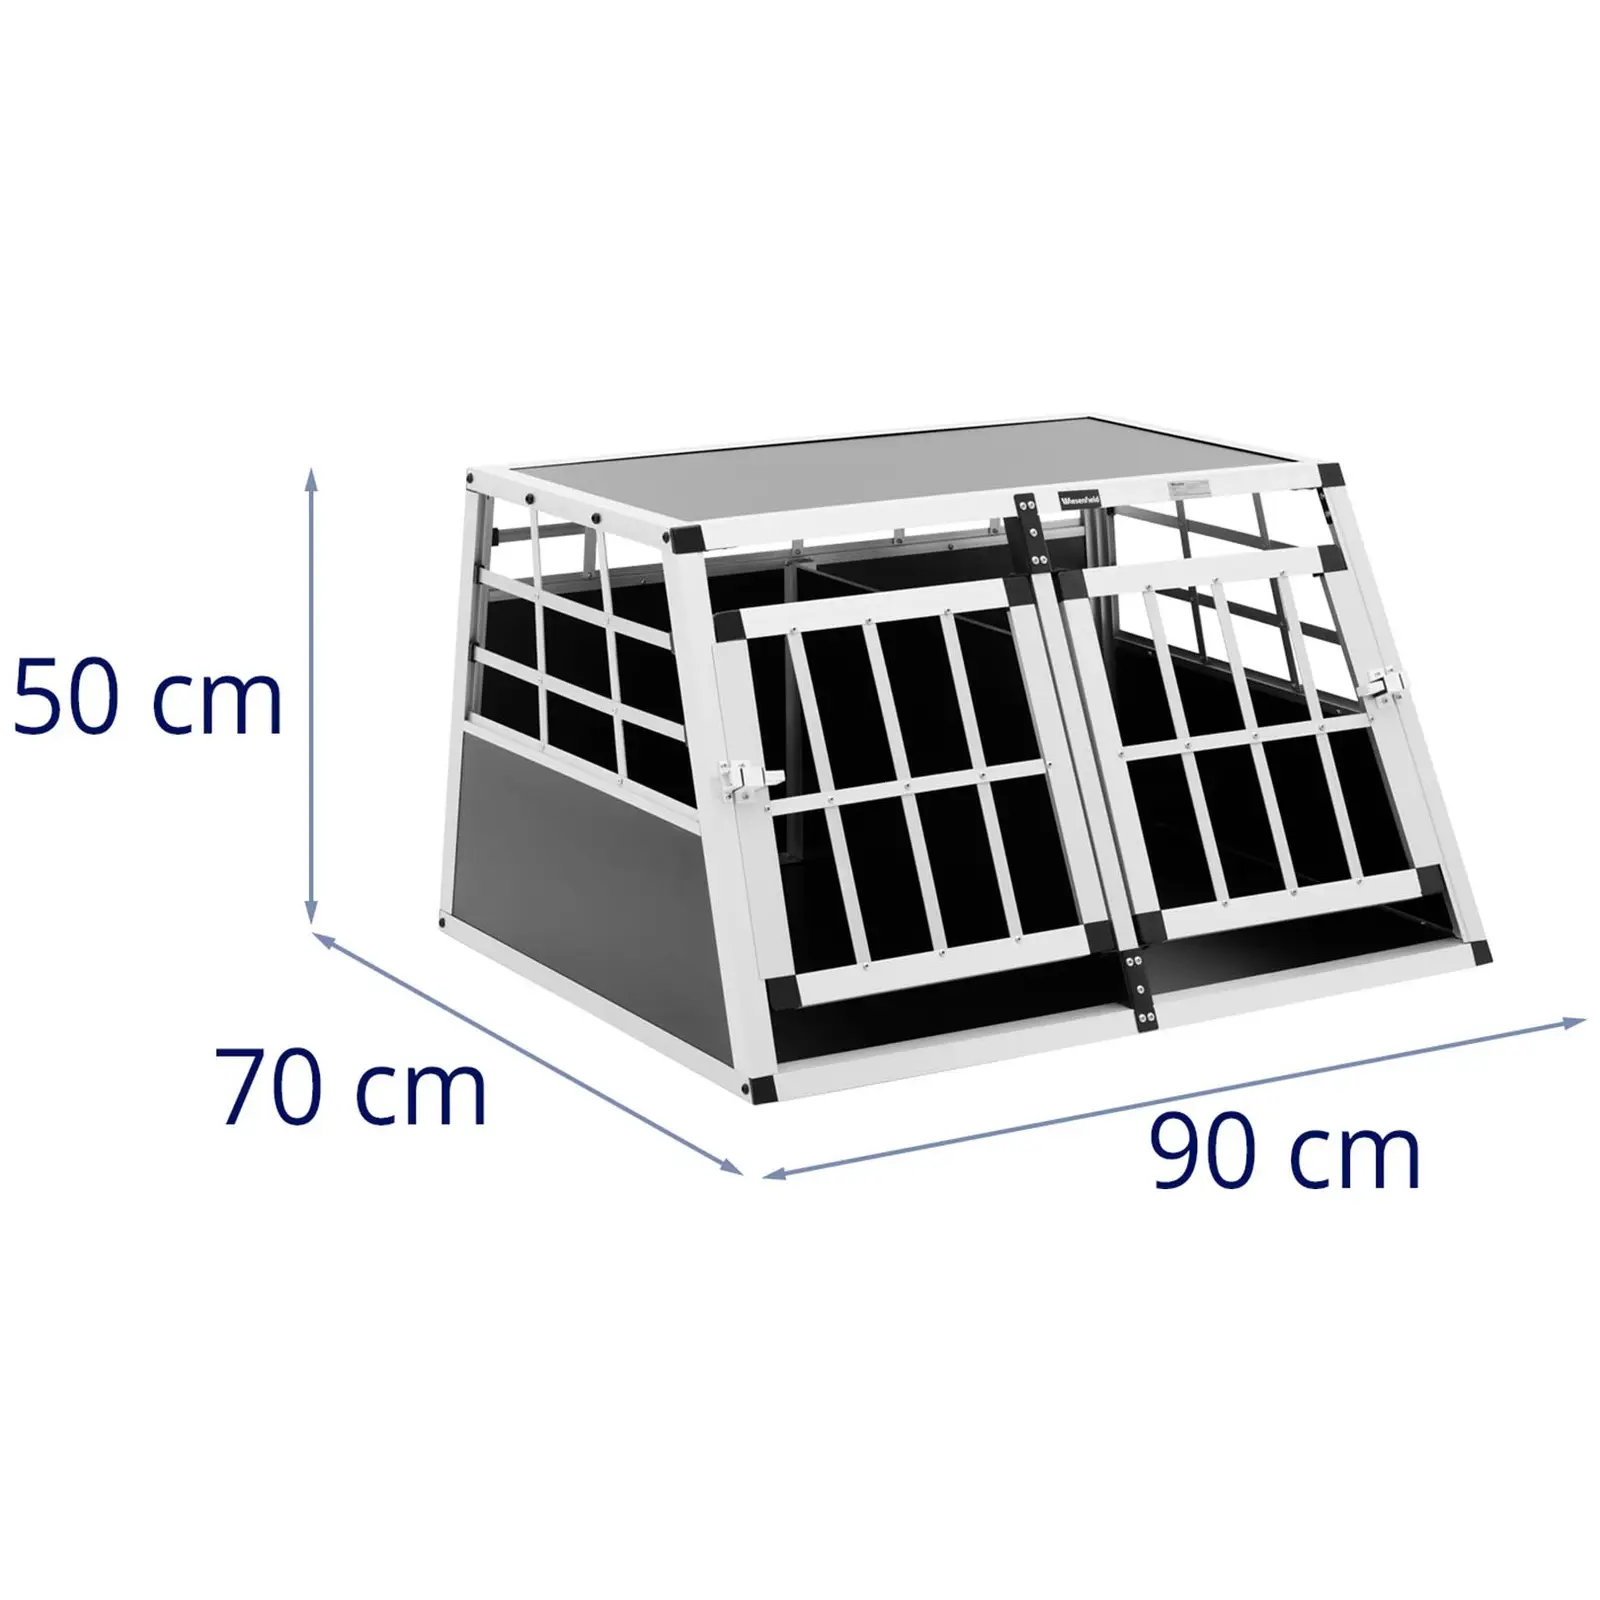 B-varer Hundebur - aluminium - trapesformet - 70 x 90 x 50 cm - med skillevegg